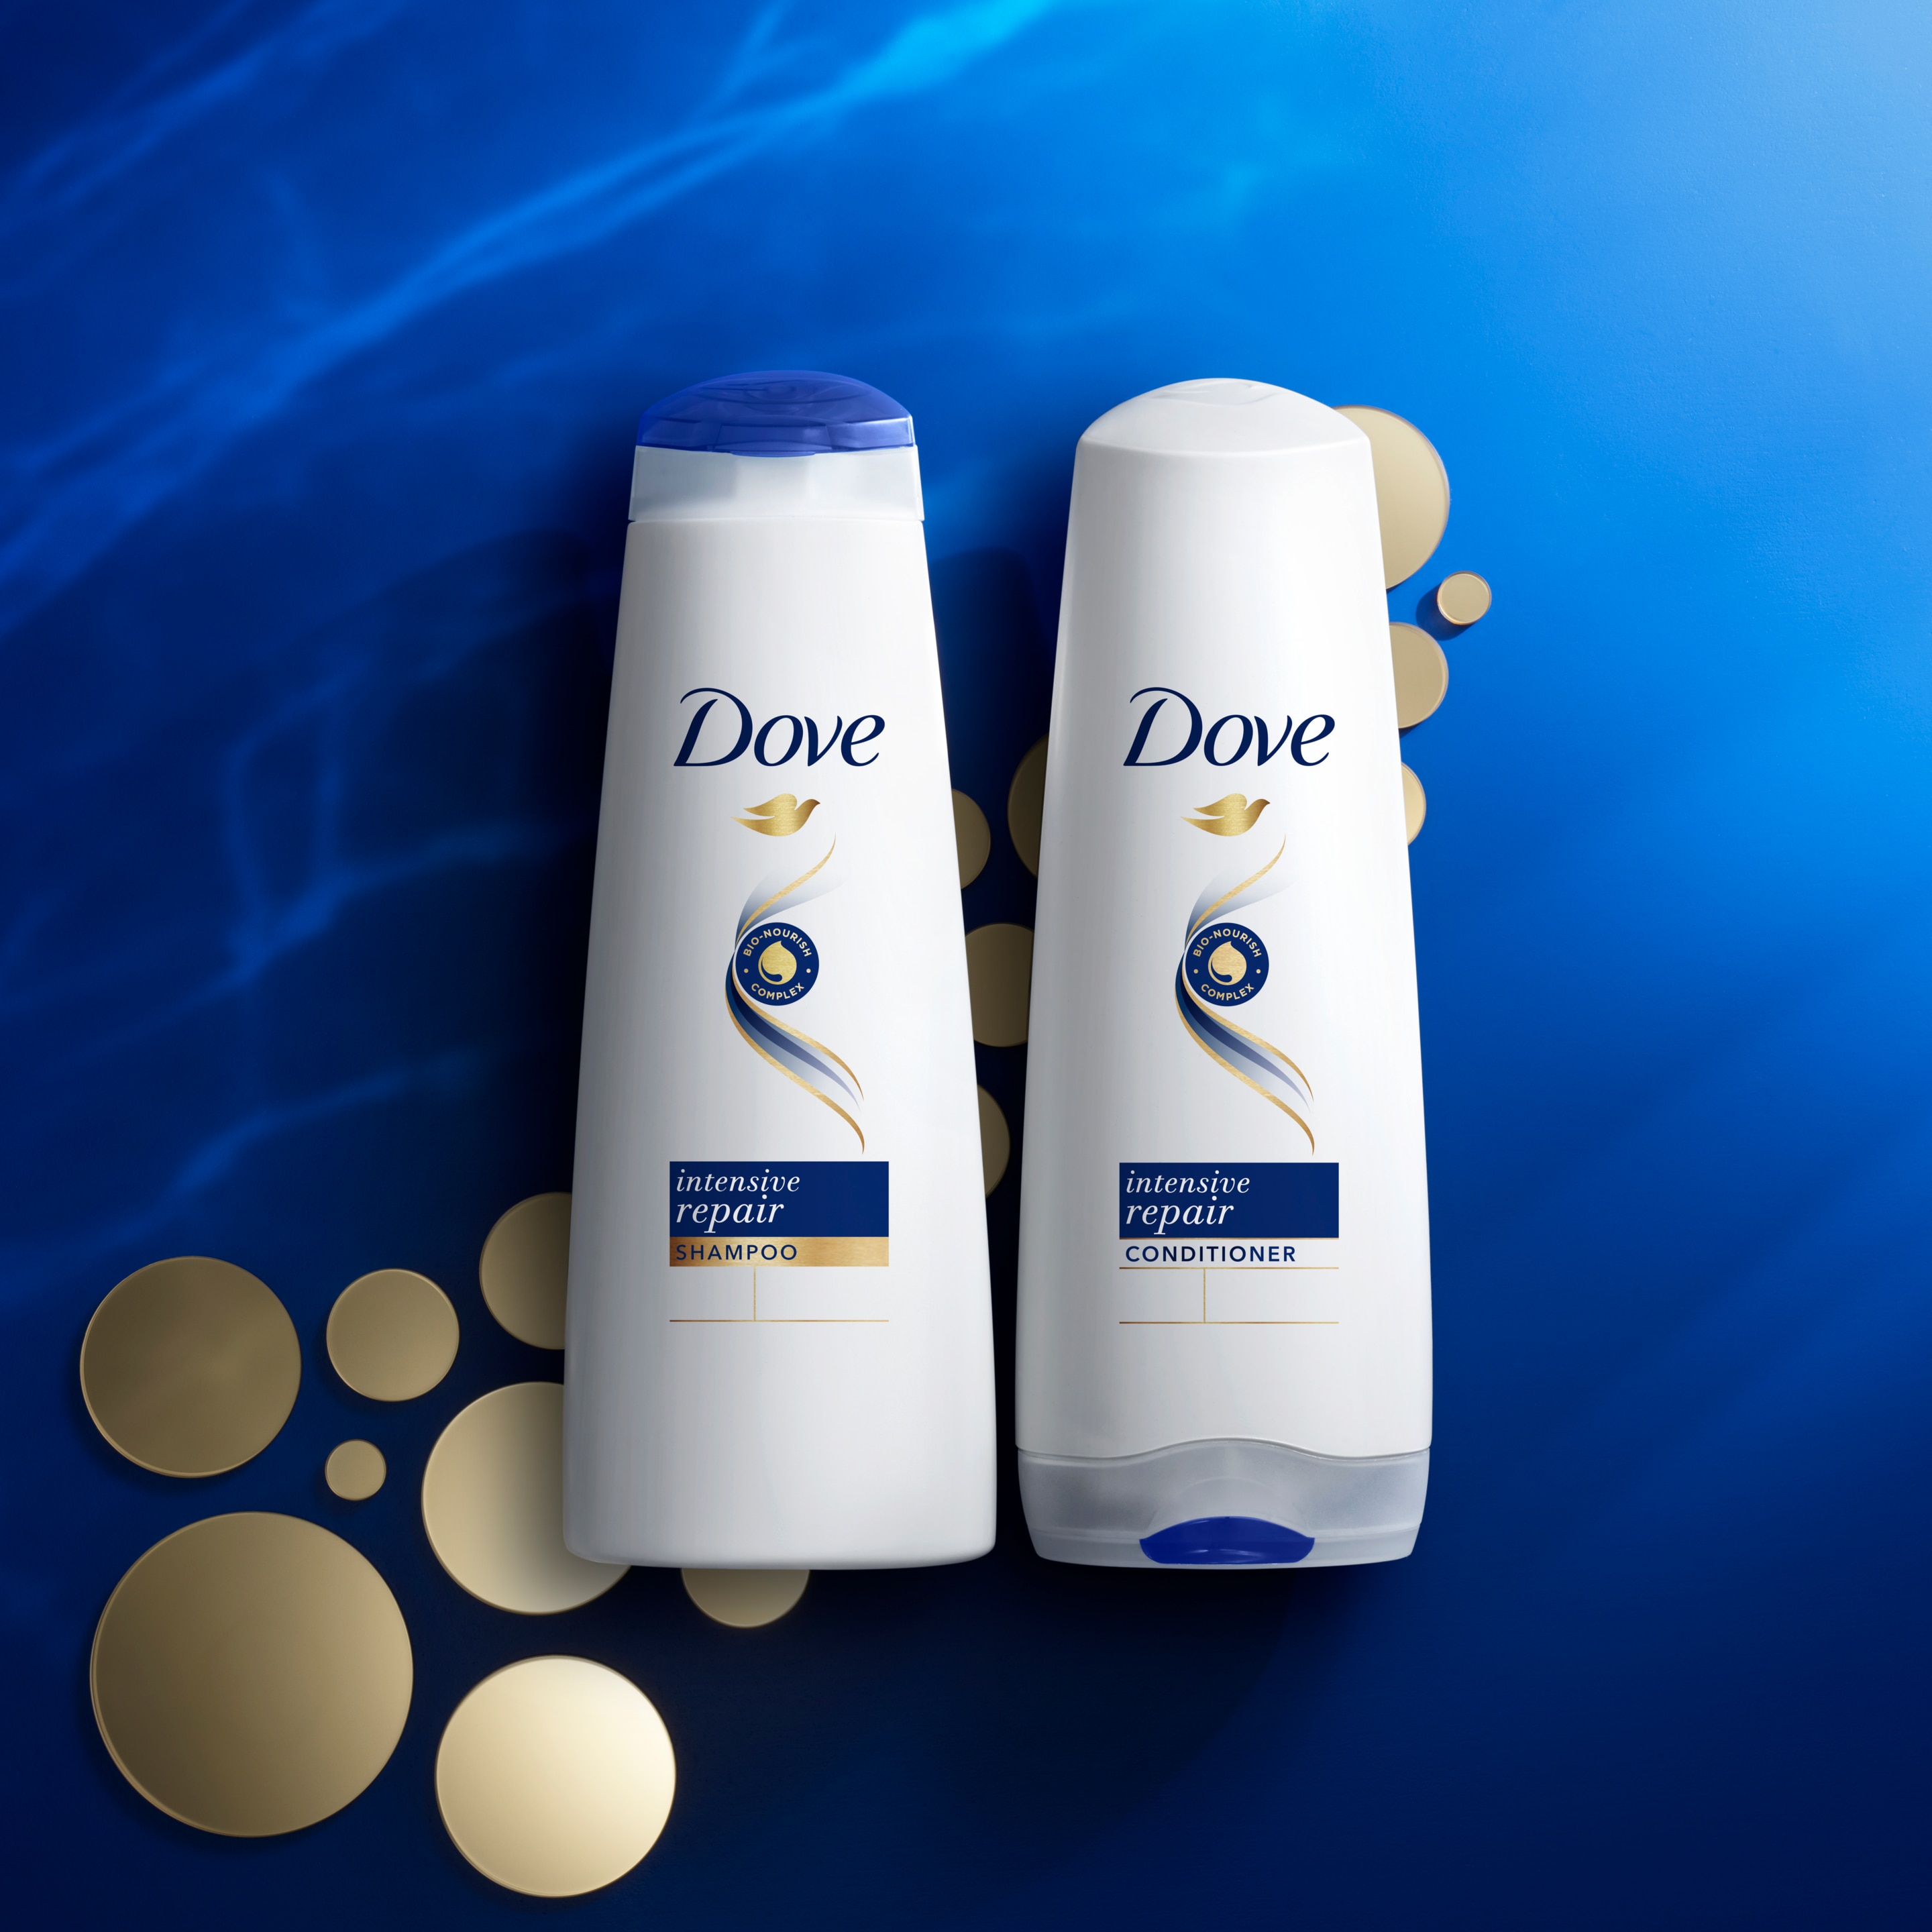 Dove Intensive Repair Shampoo and Conditioner